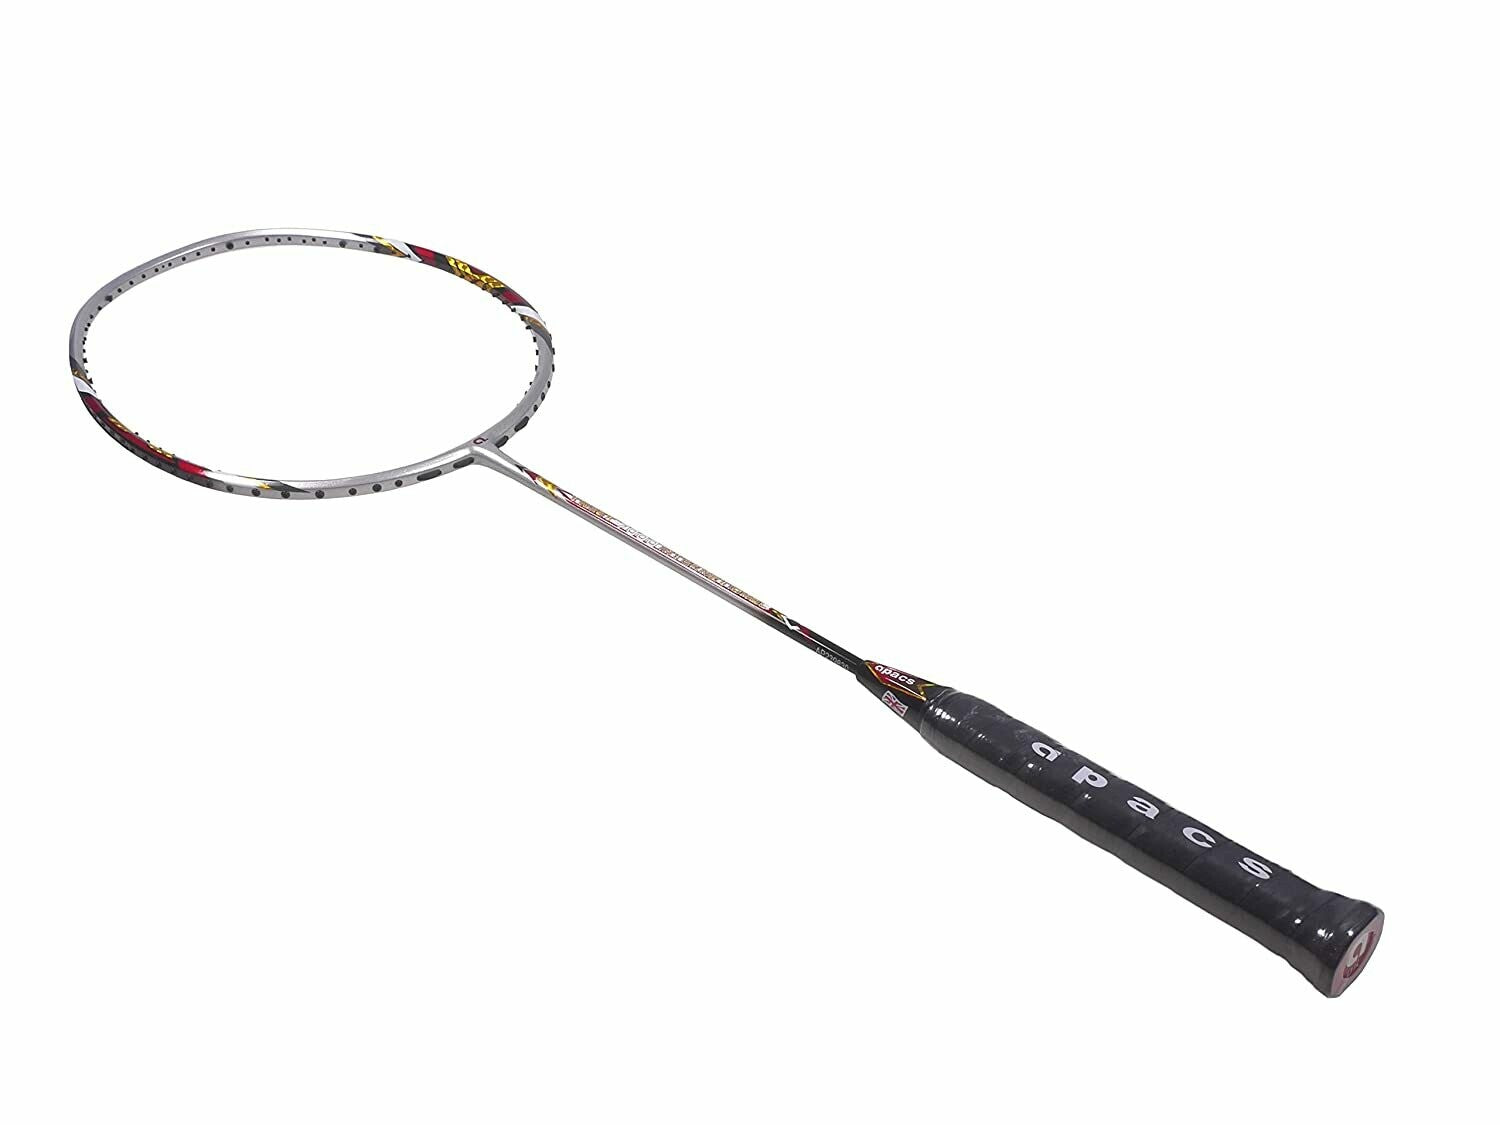 APACS Tweet 7000 International Badminton Racket